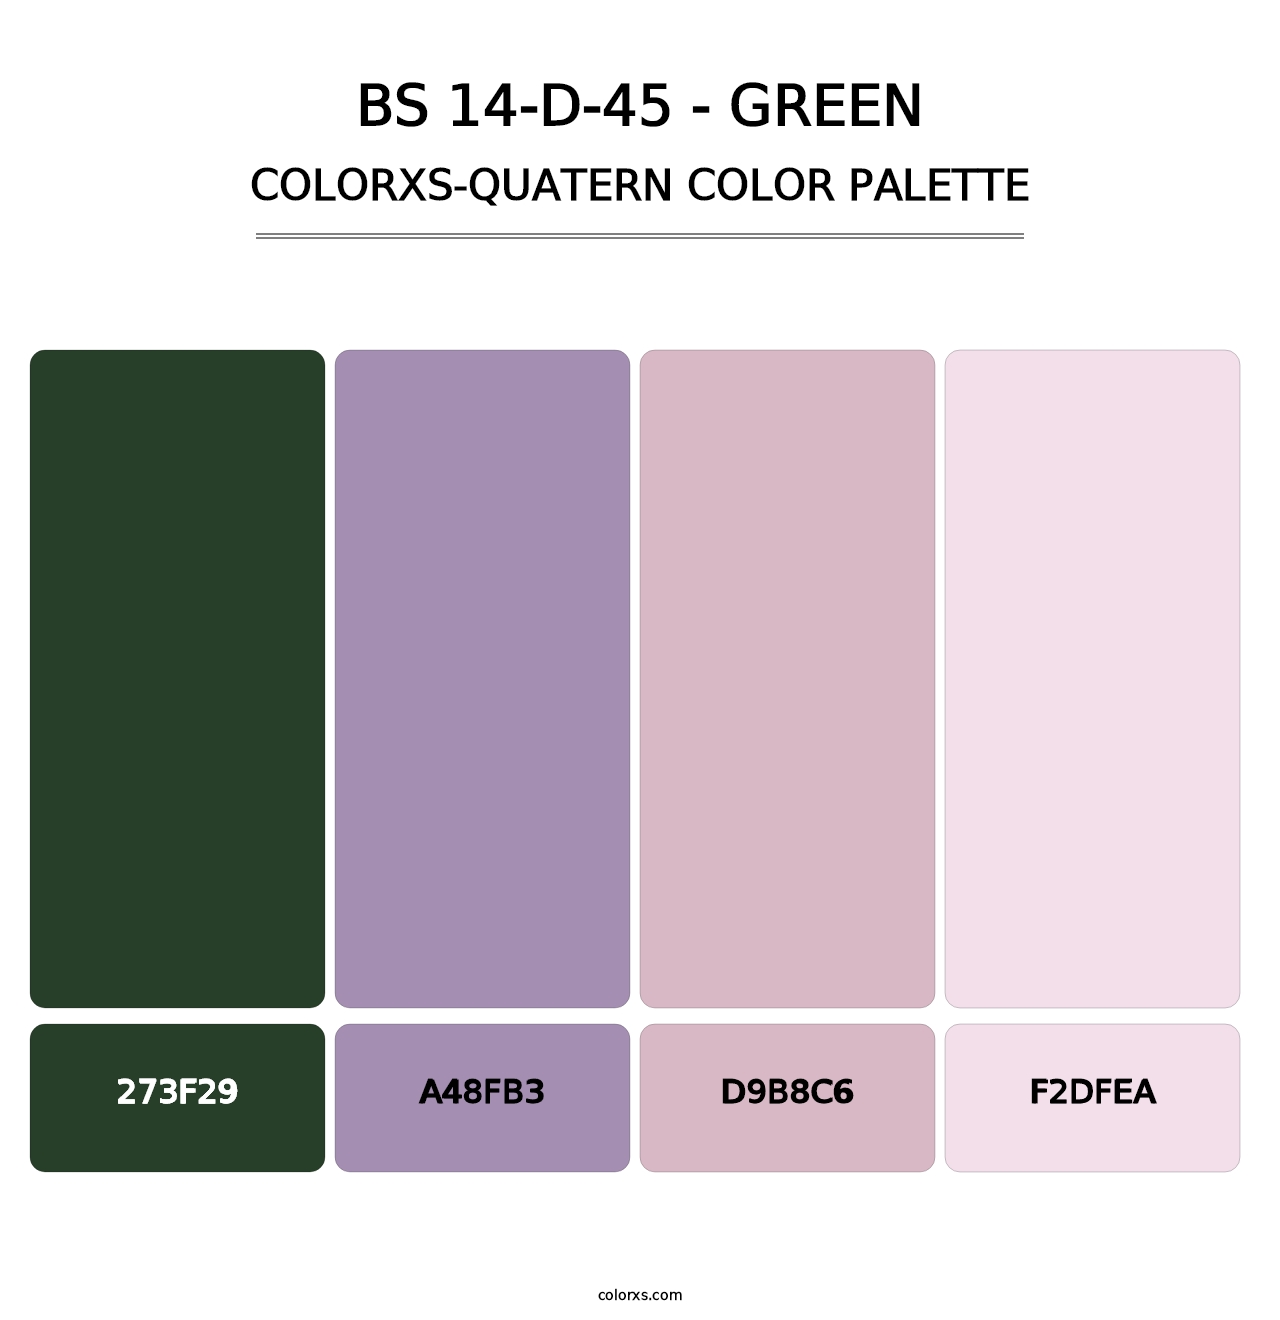 BS 14-D-45 - Green - Colorxs Quatern Palette